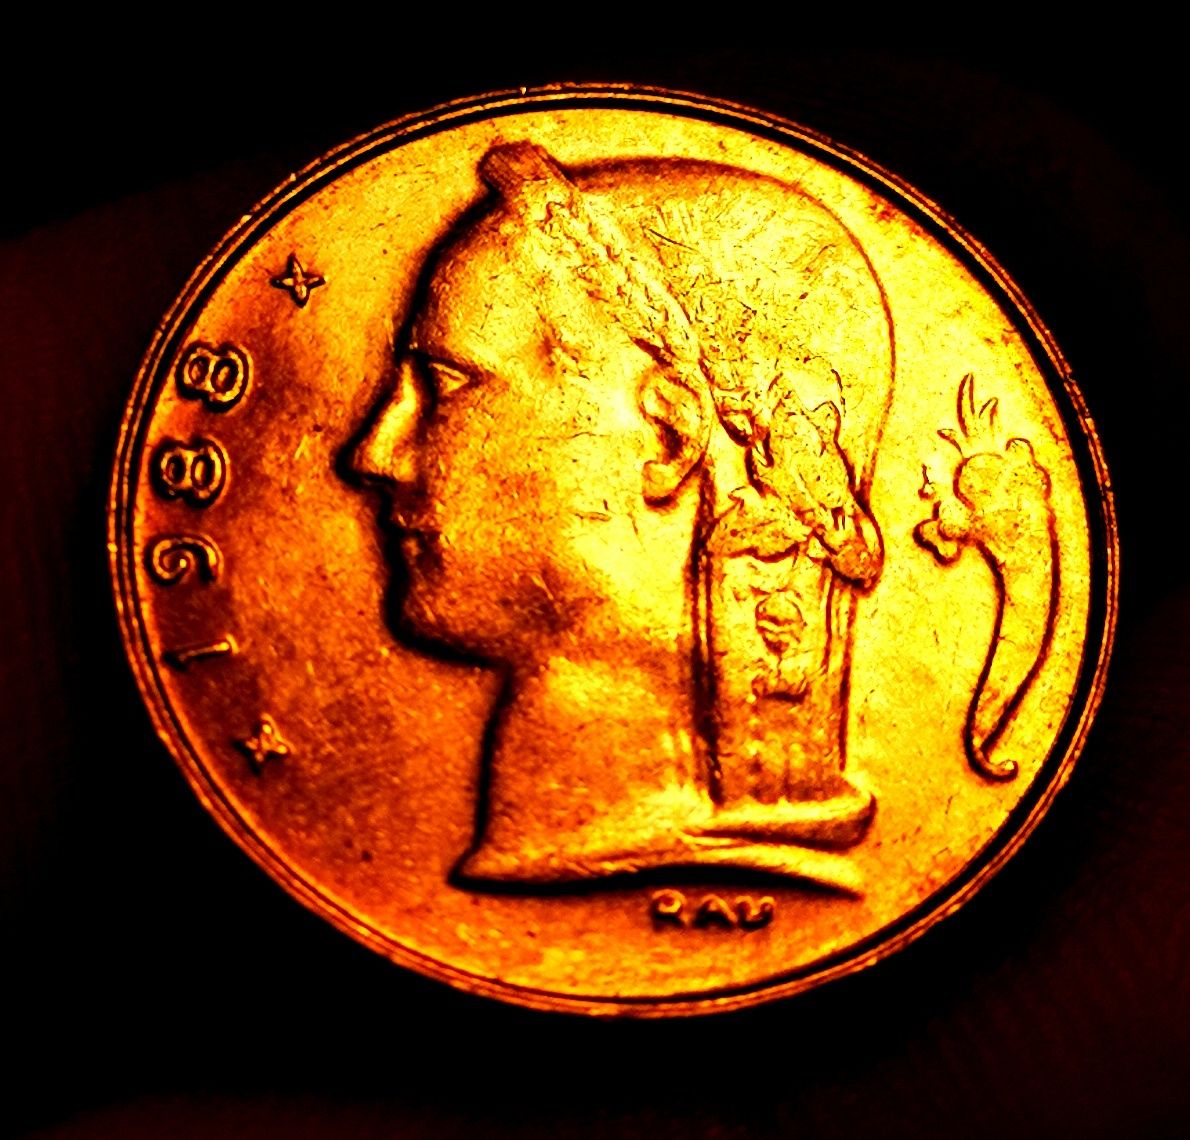 Moneta obiegowa 1 frank Belgia 1988r